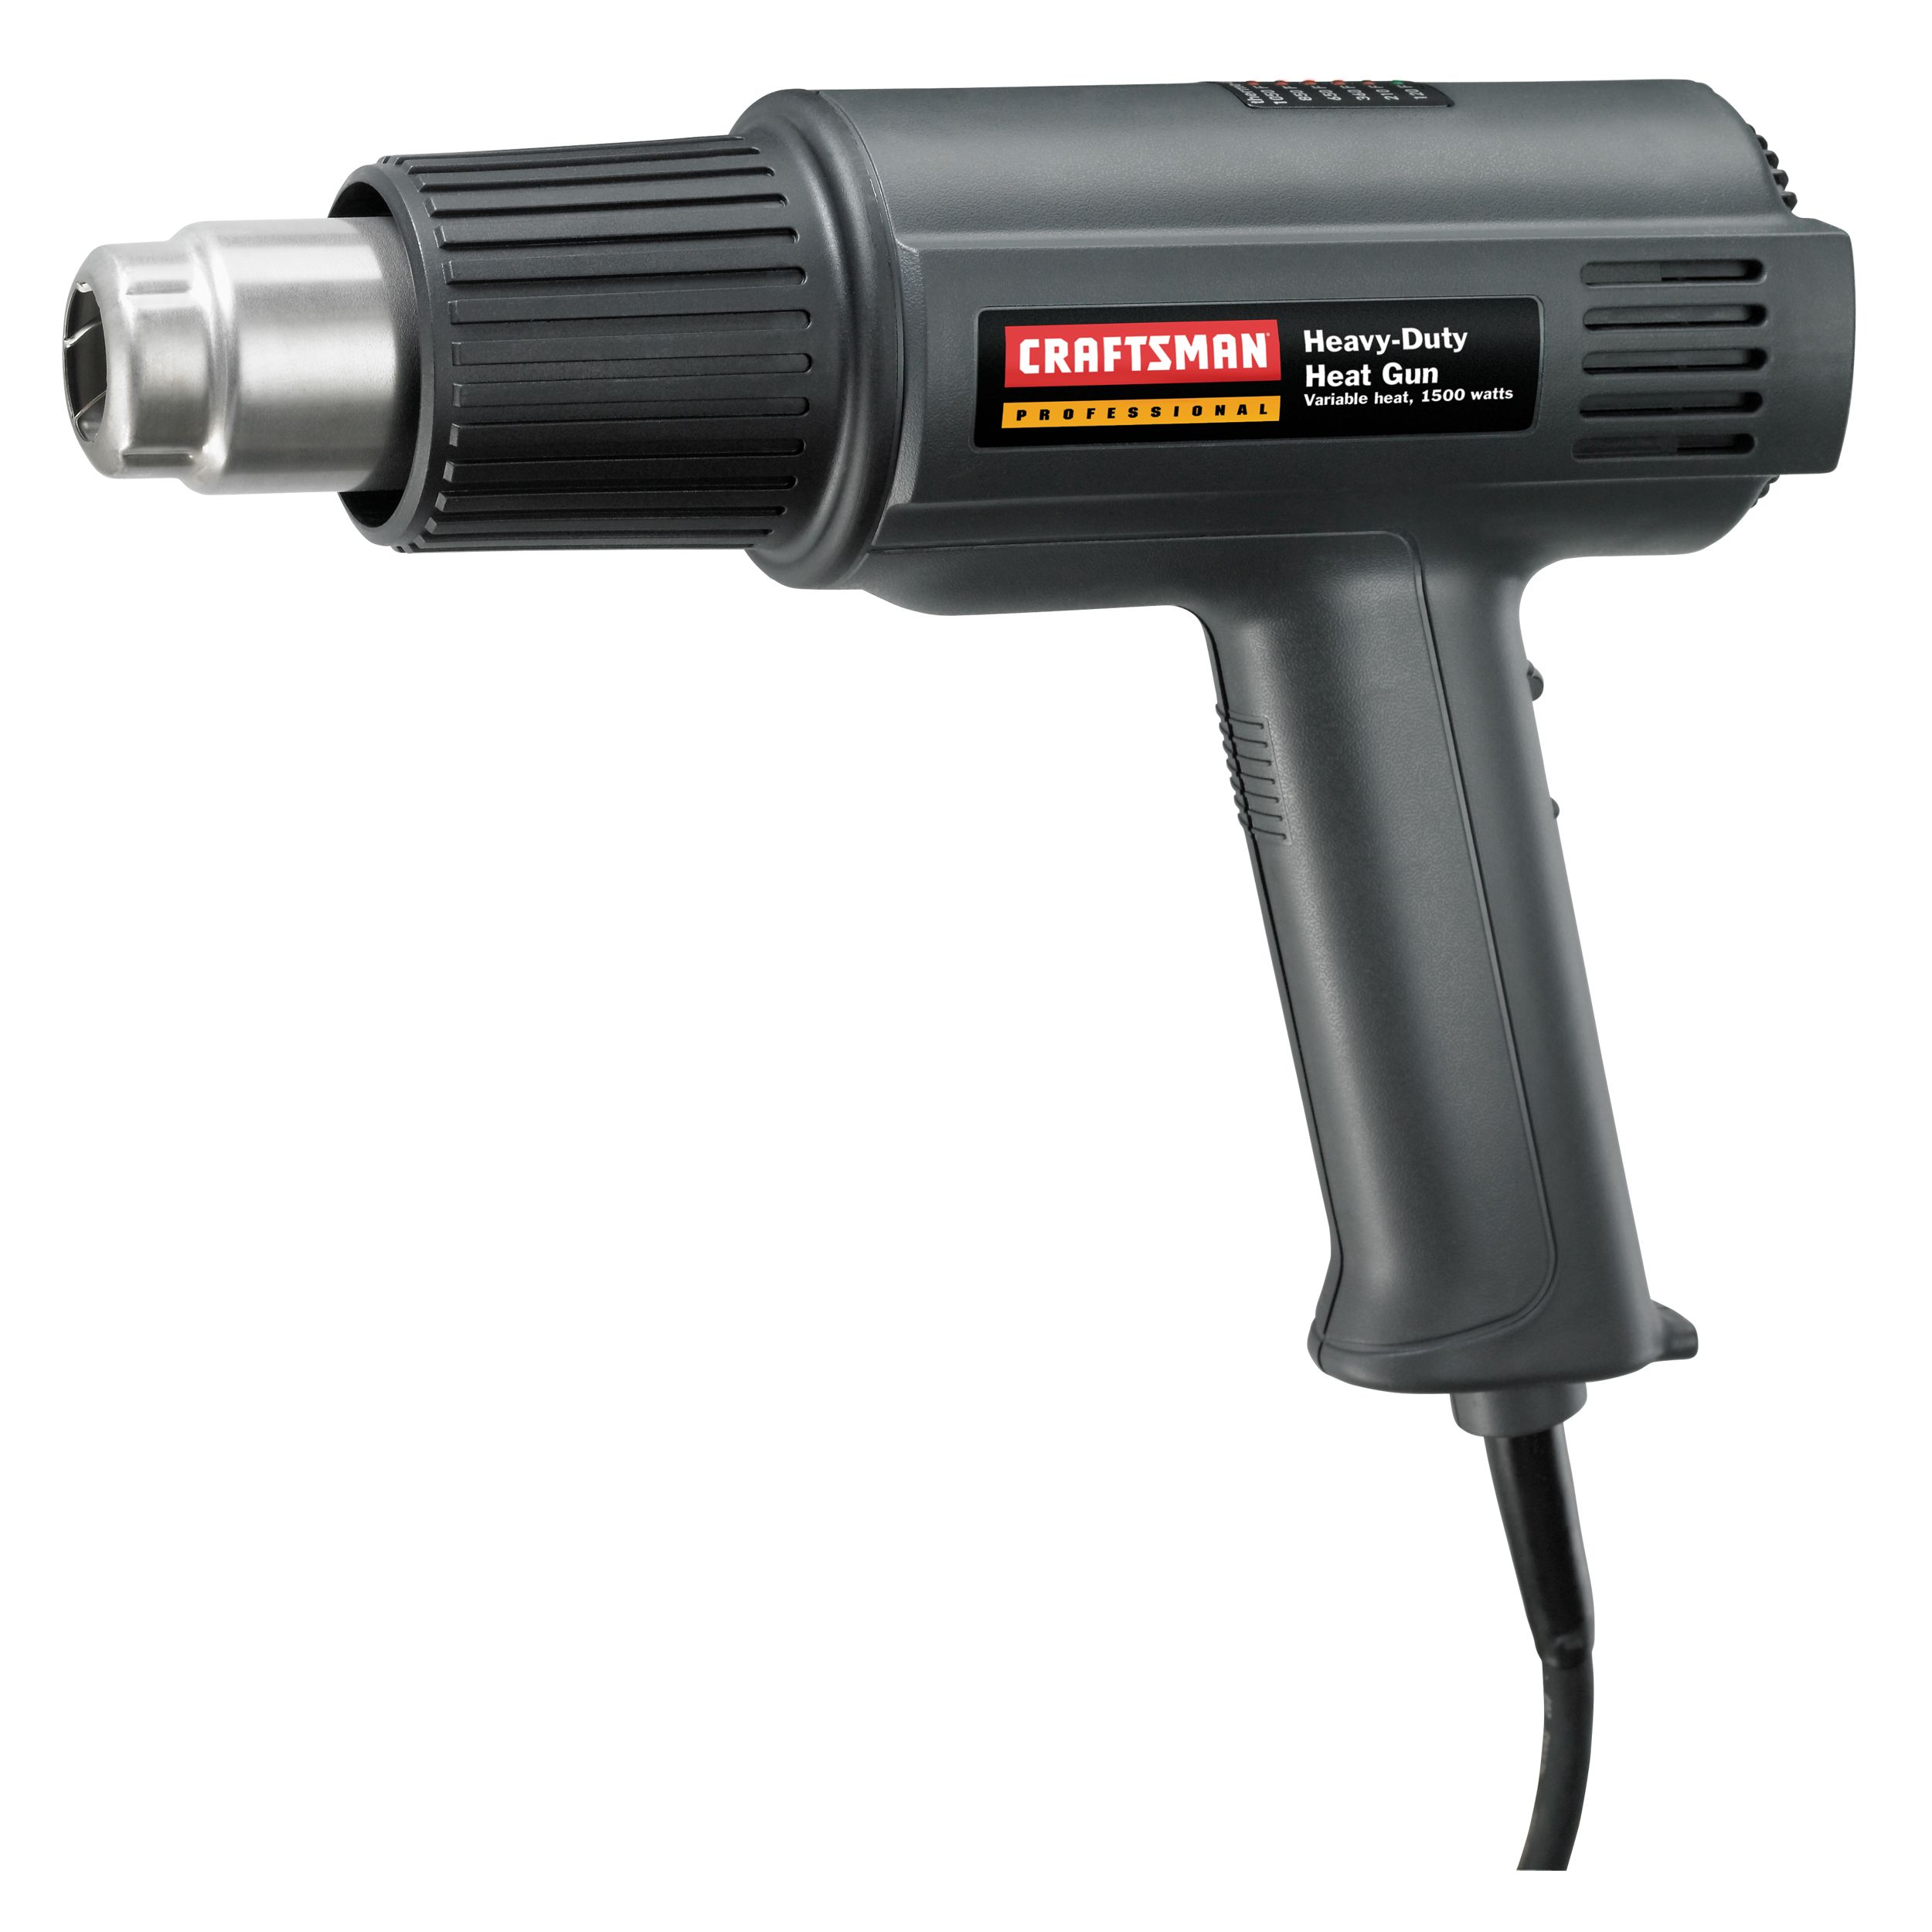 Craftsman 27801 1500 watt Corded Heavy-Duty Heat Gun